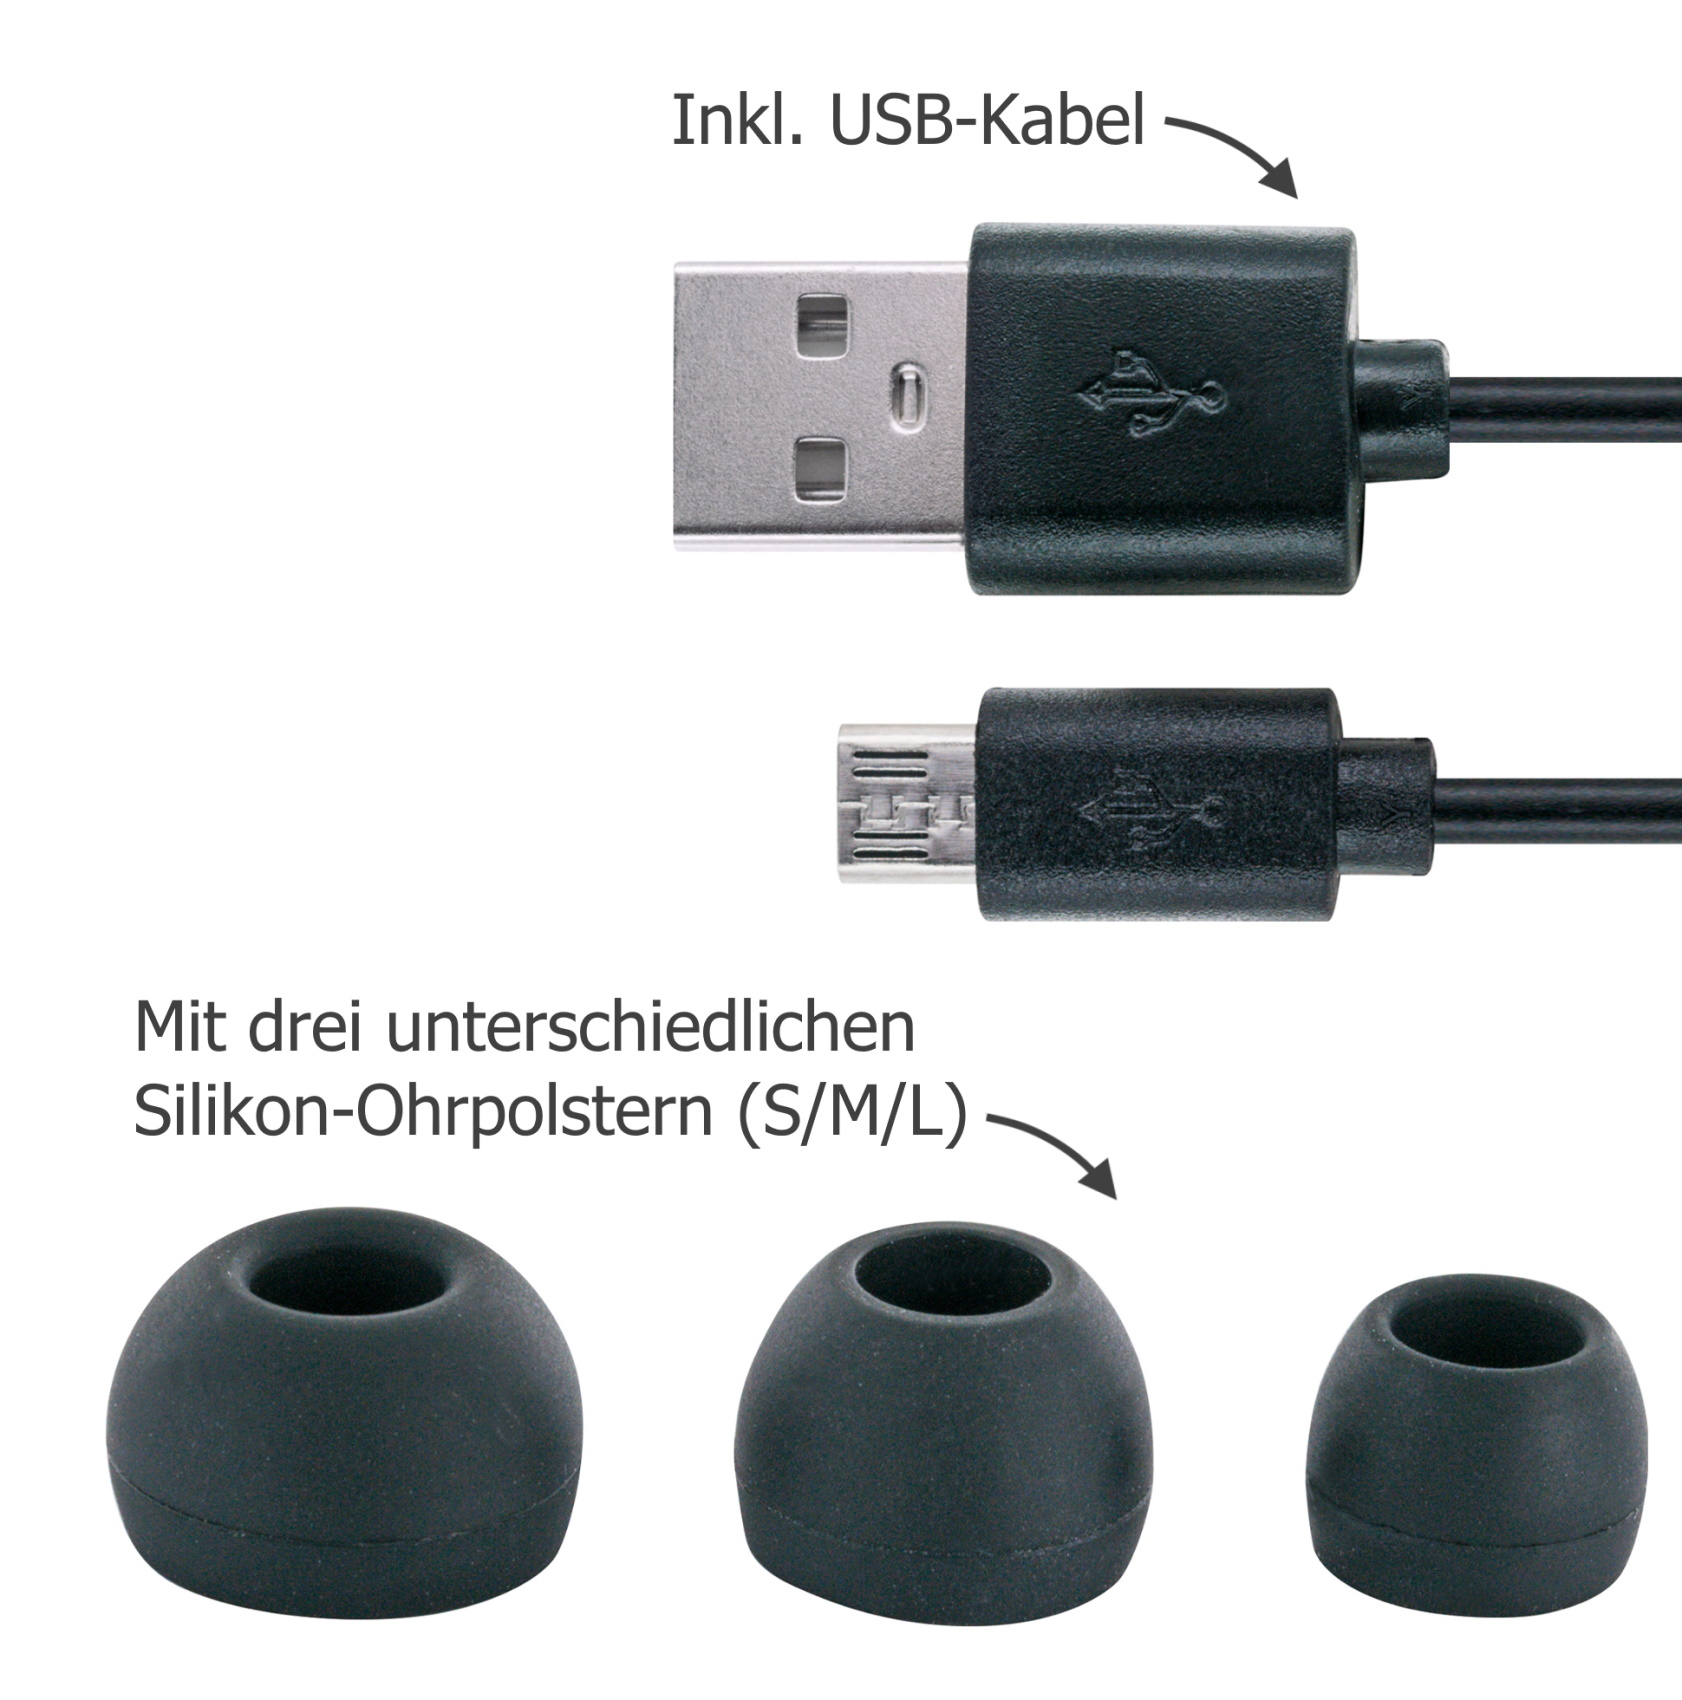 SCHWAIGER -KH710BTG Kopfhörer Bluetooth In-ear 511-, Grün Bluetooth®